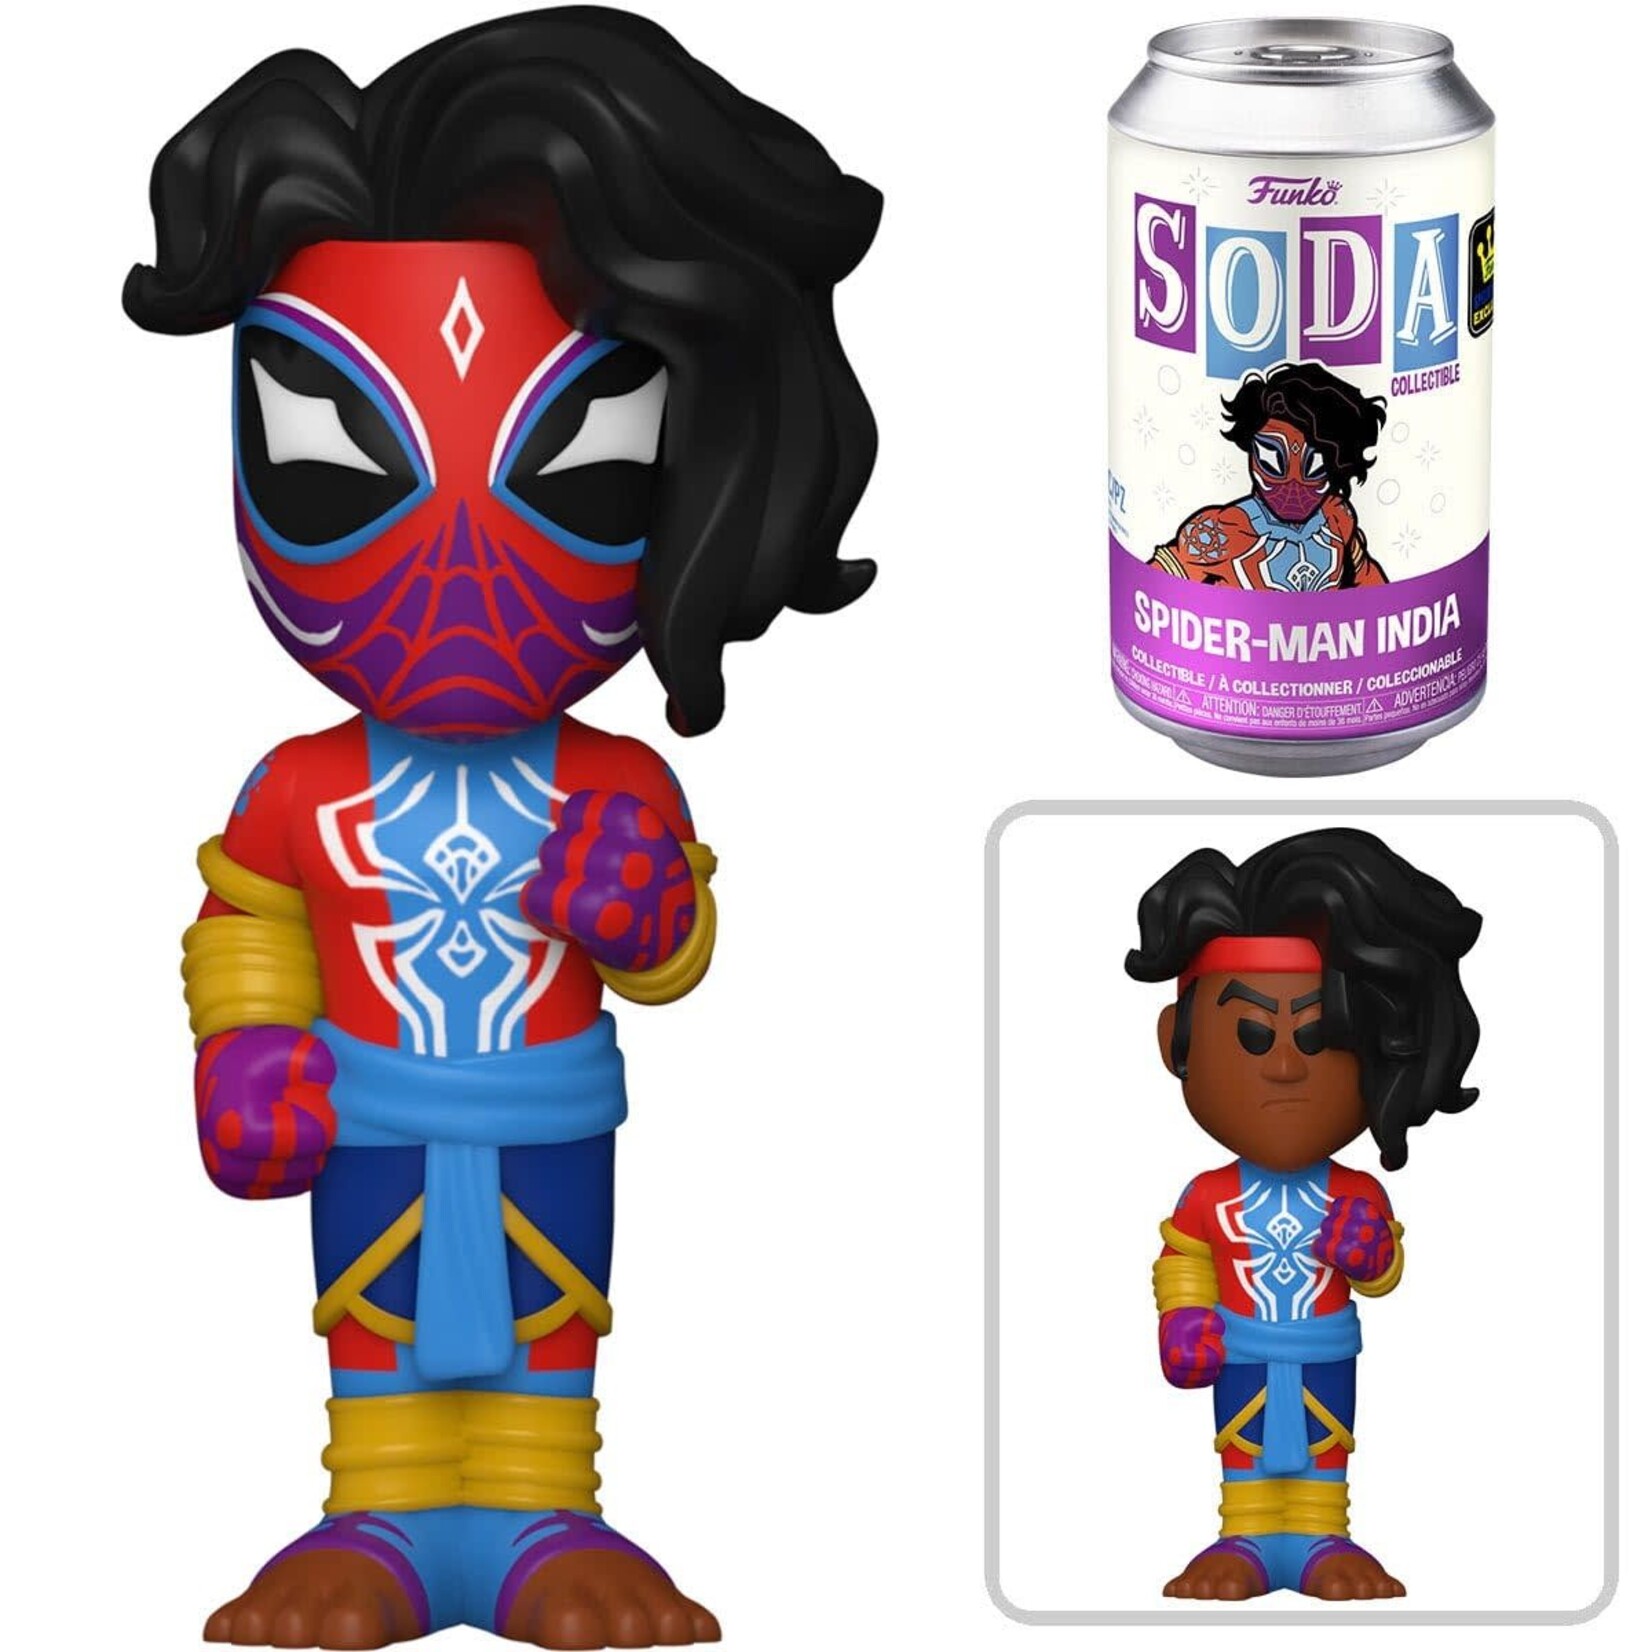 Funko Vinyl Soda Specialty Spiderverse Spiderman India